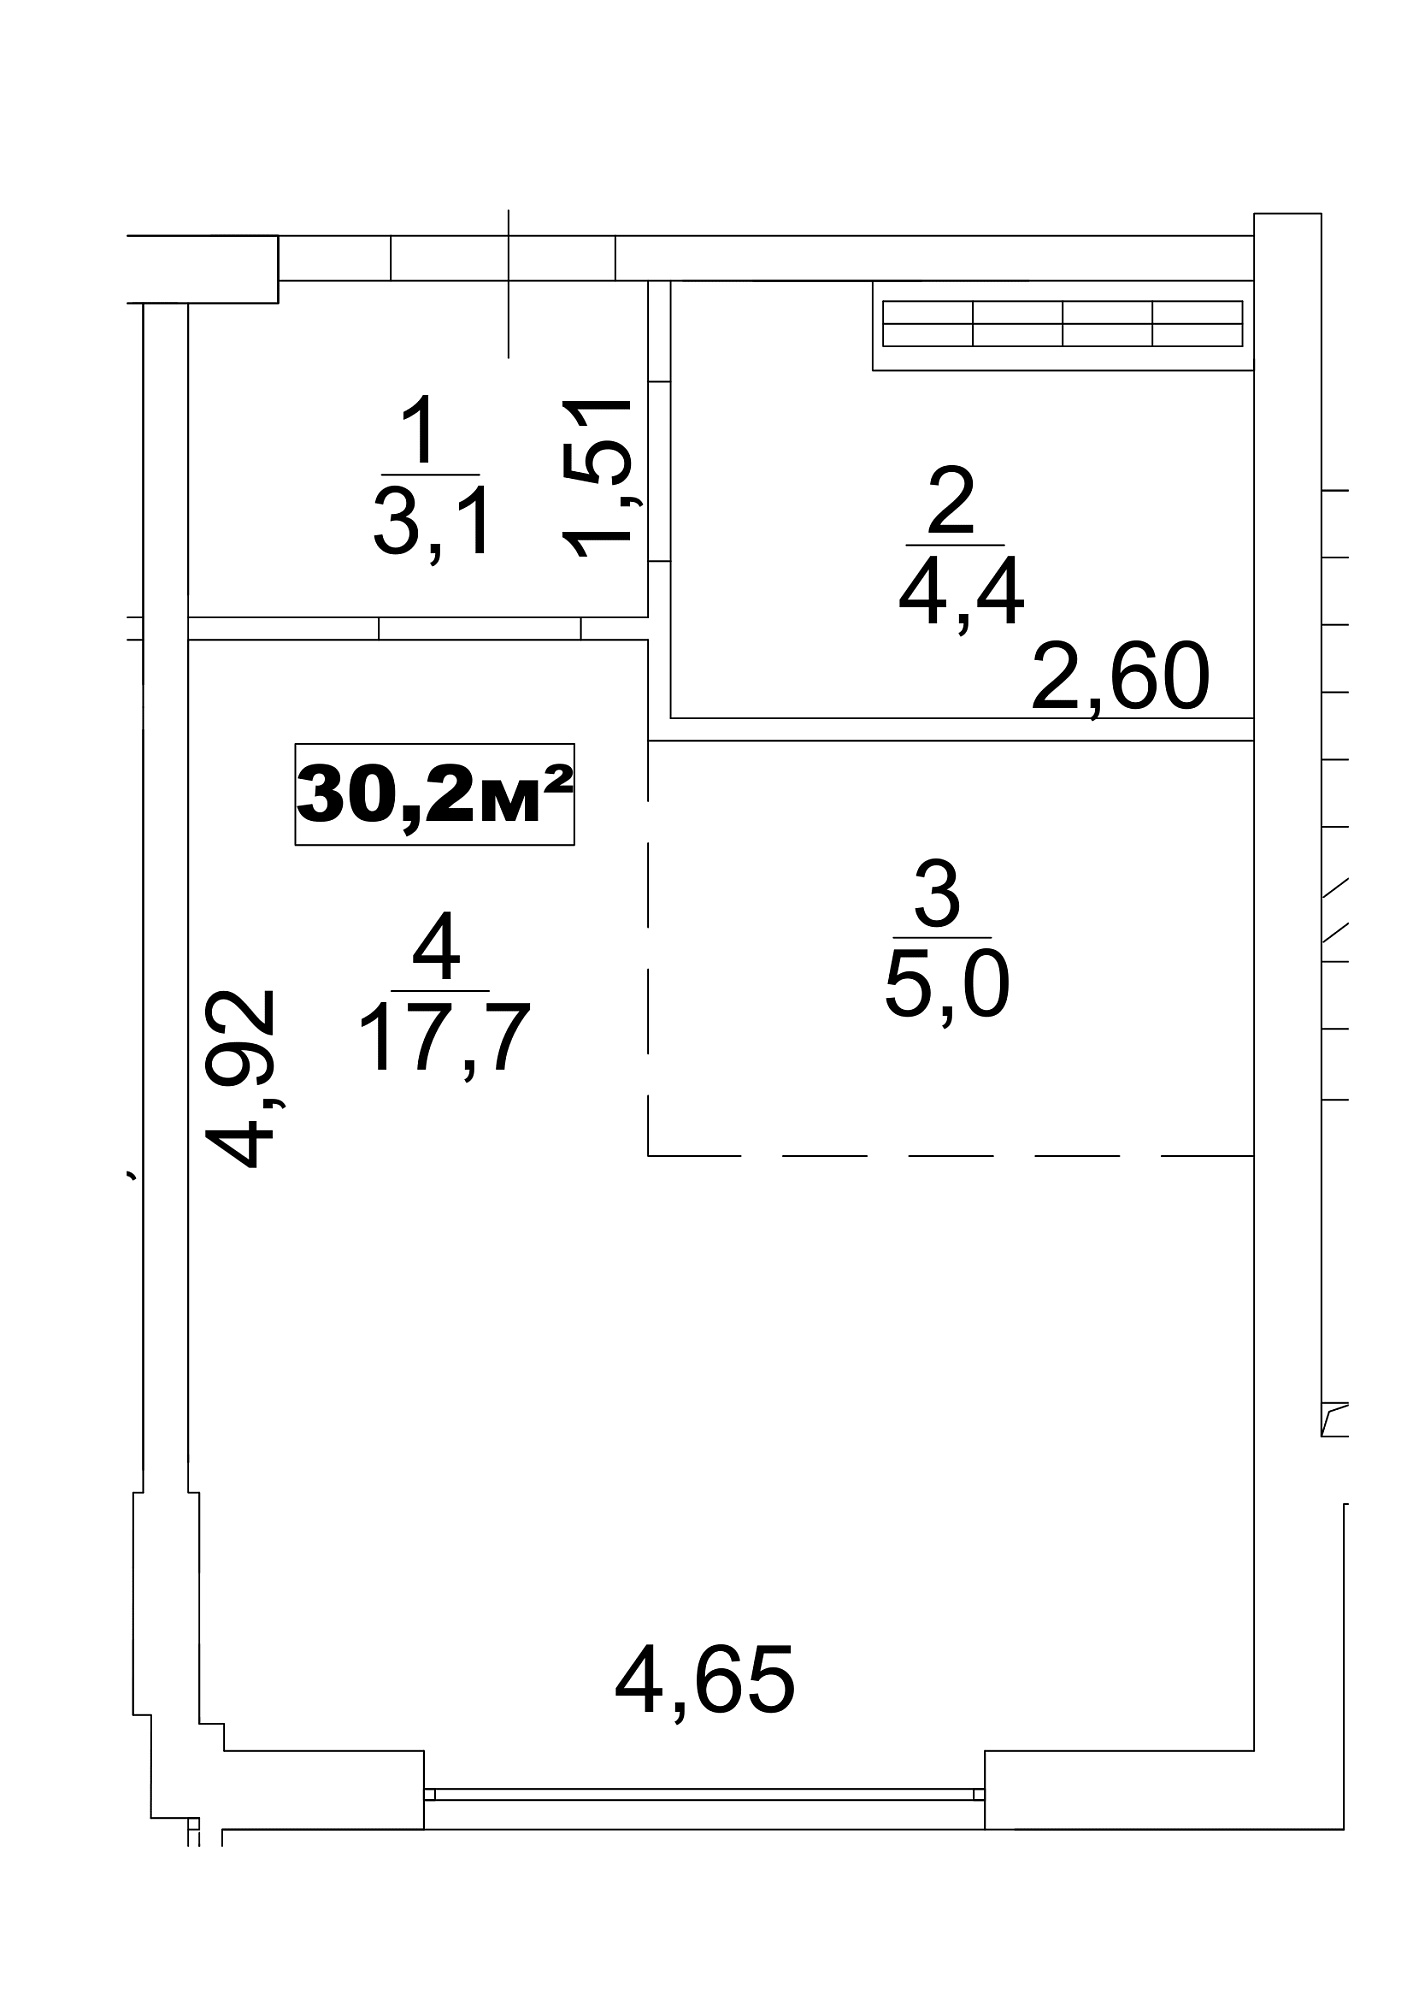 Planning Smart flats area 30.2m2, AB-13-06/0043а.